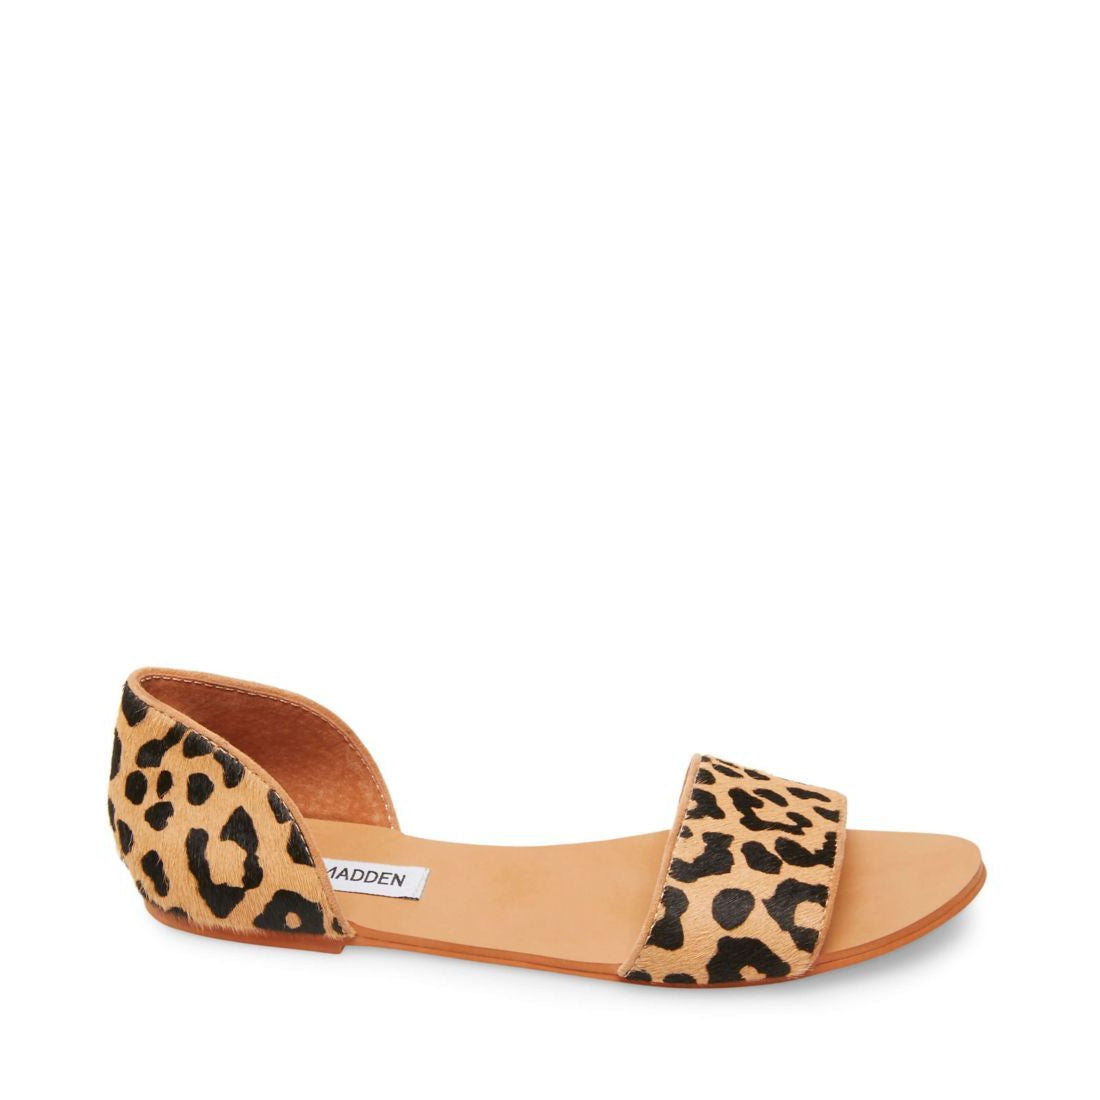 steve madden leopard sandals